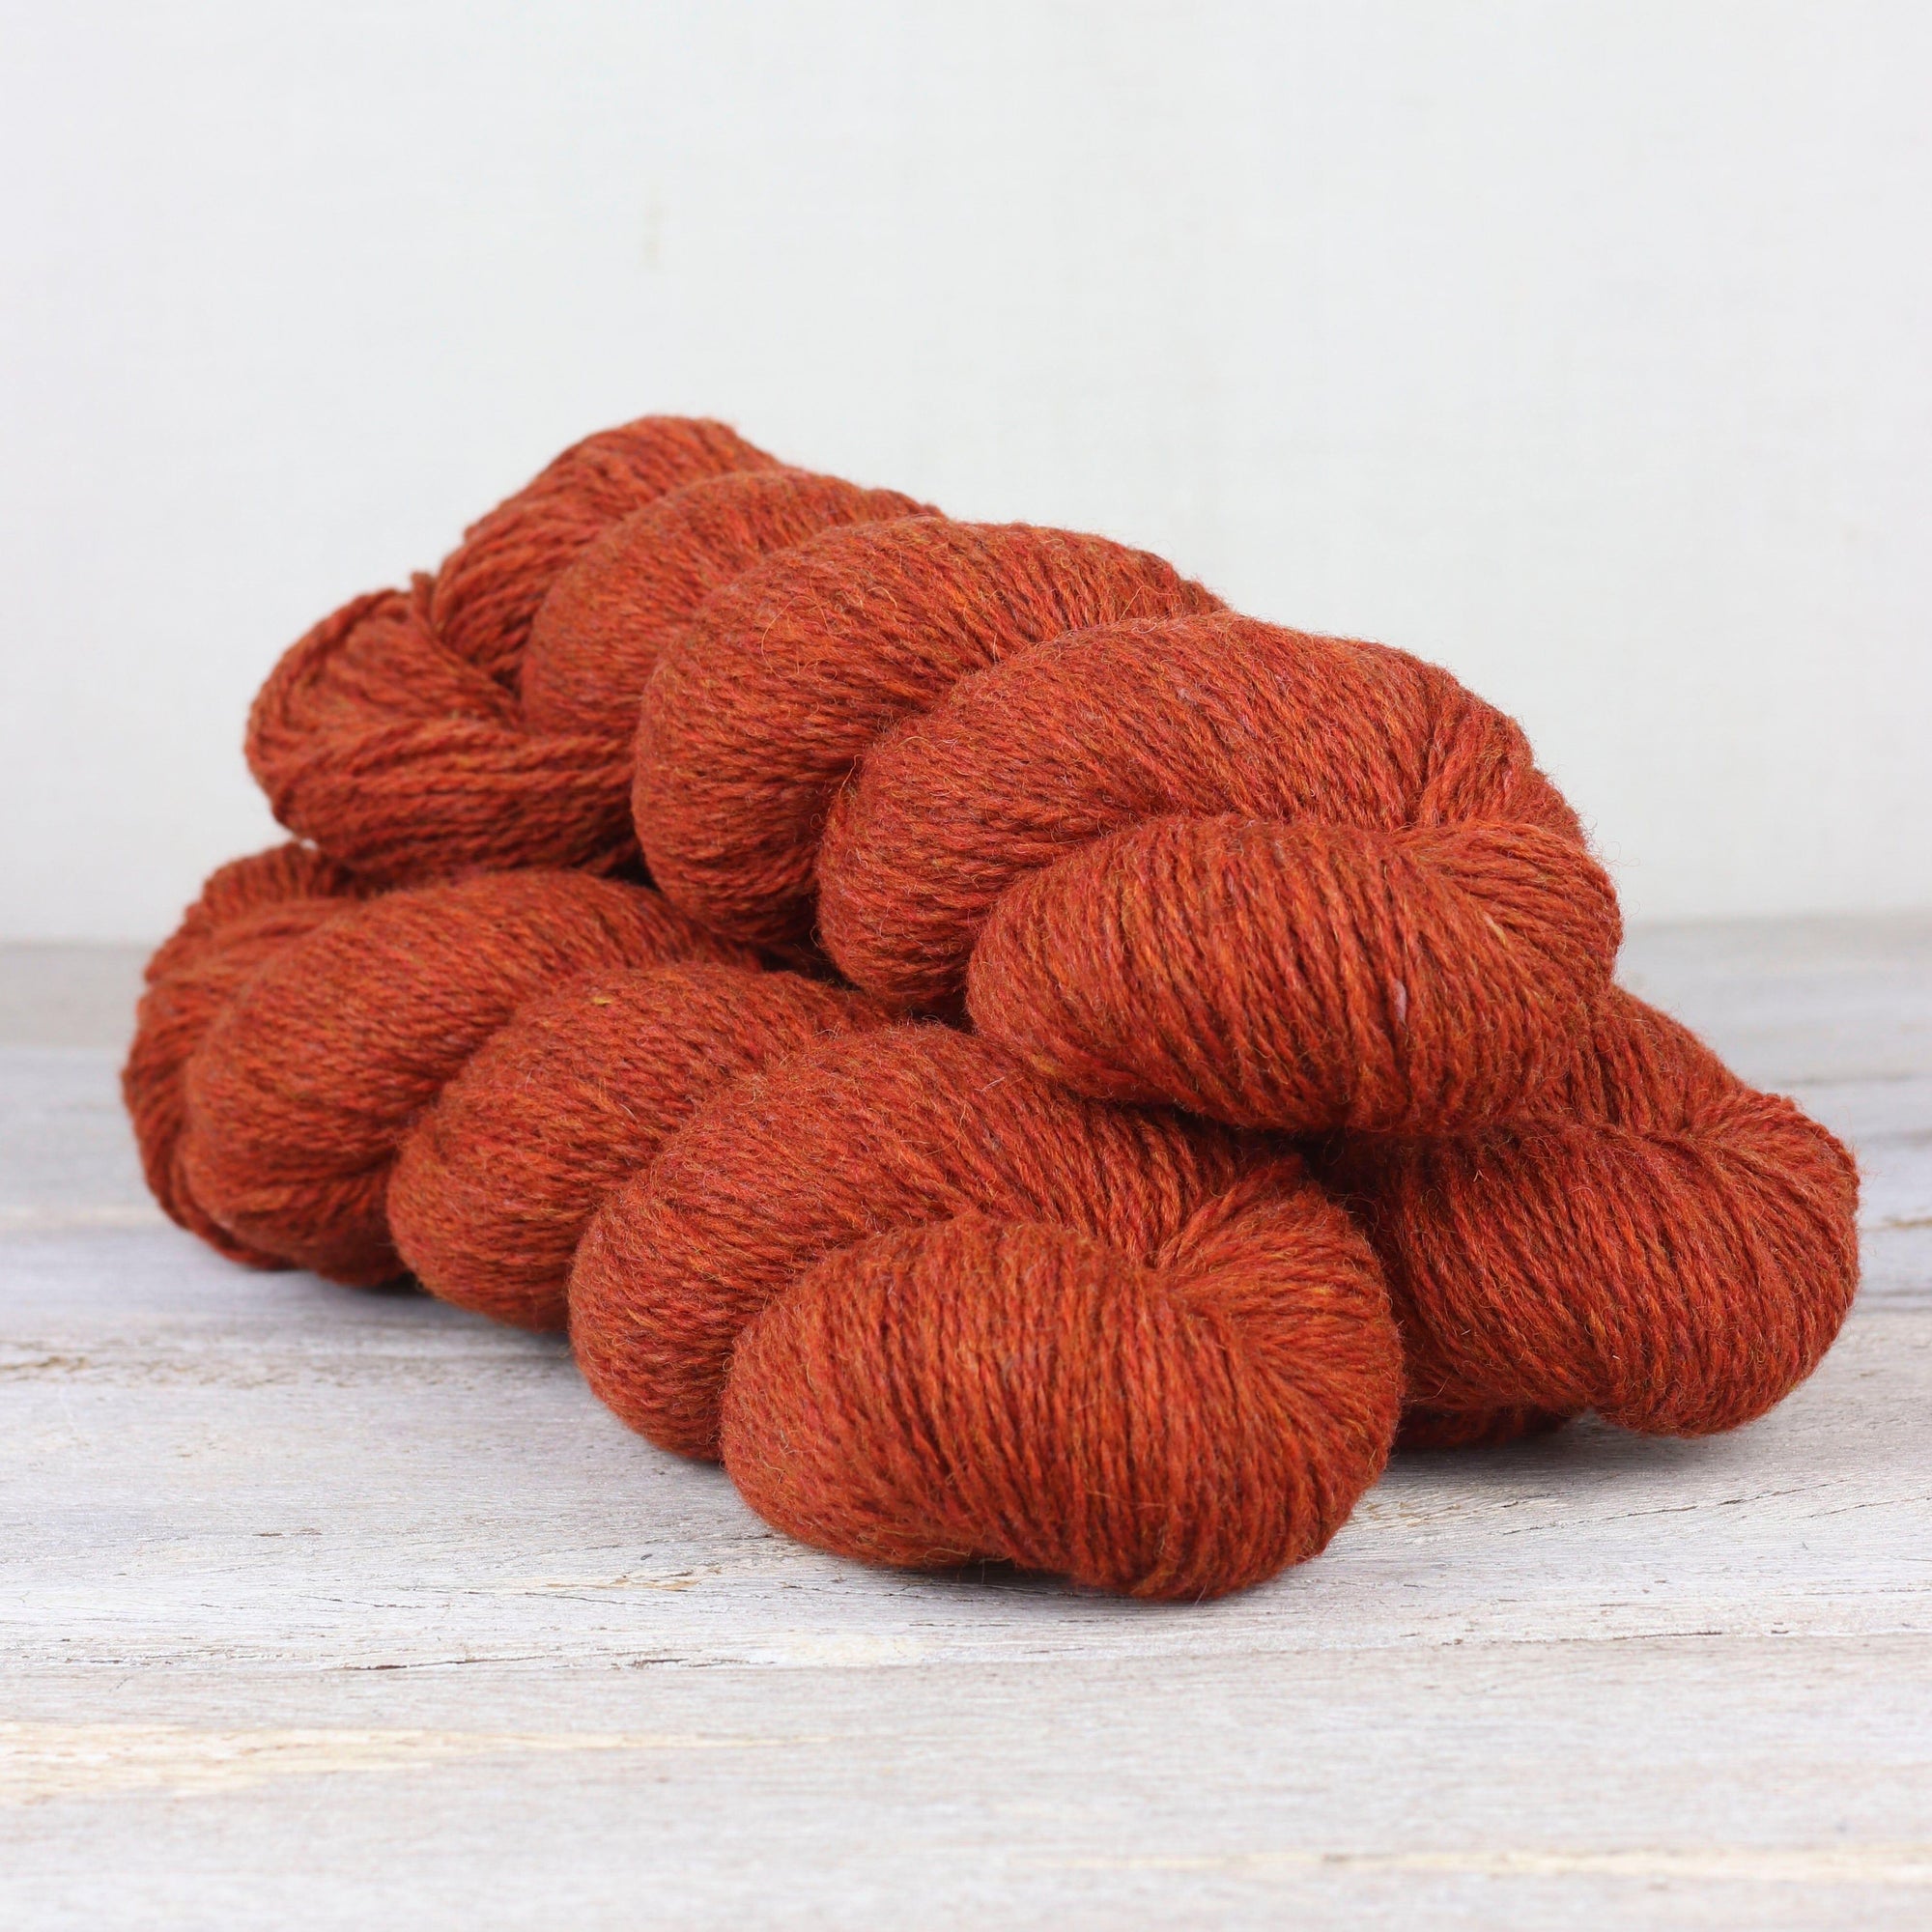 The Fibre Co. The Fibre Co. Lore - Eager - DK Knitting Yarn